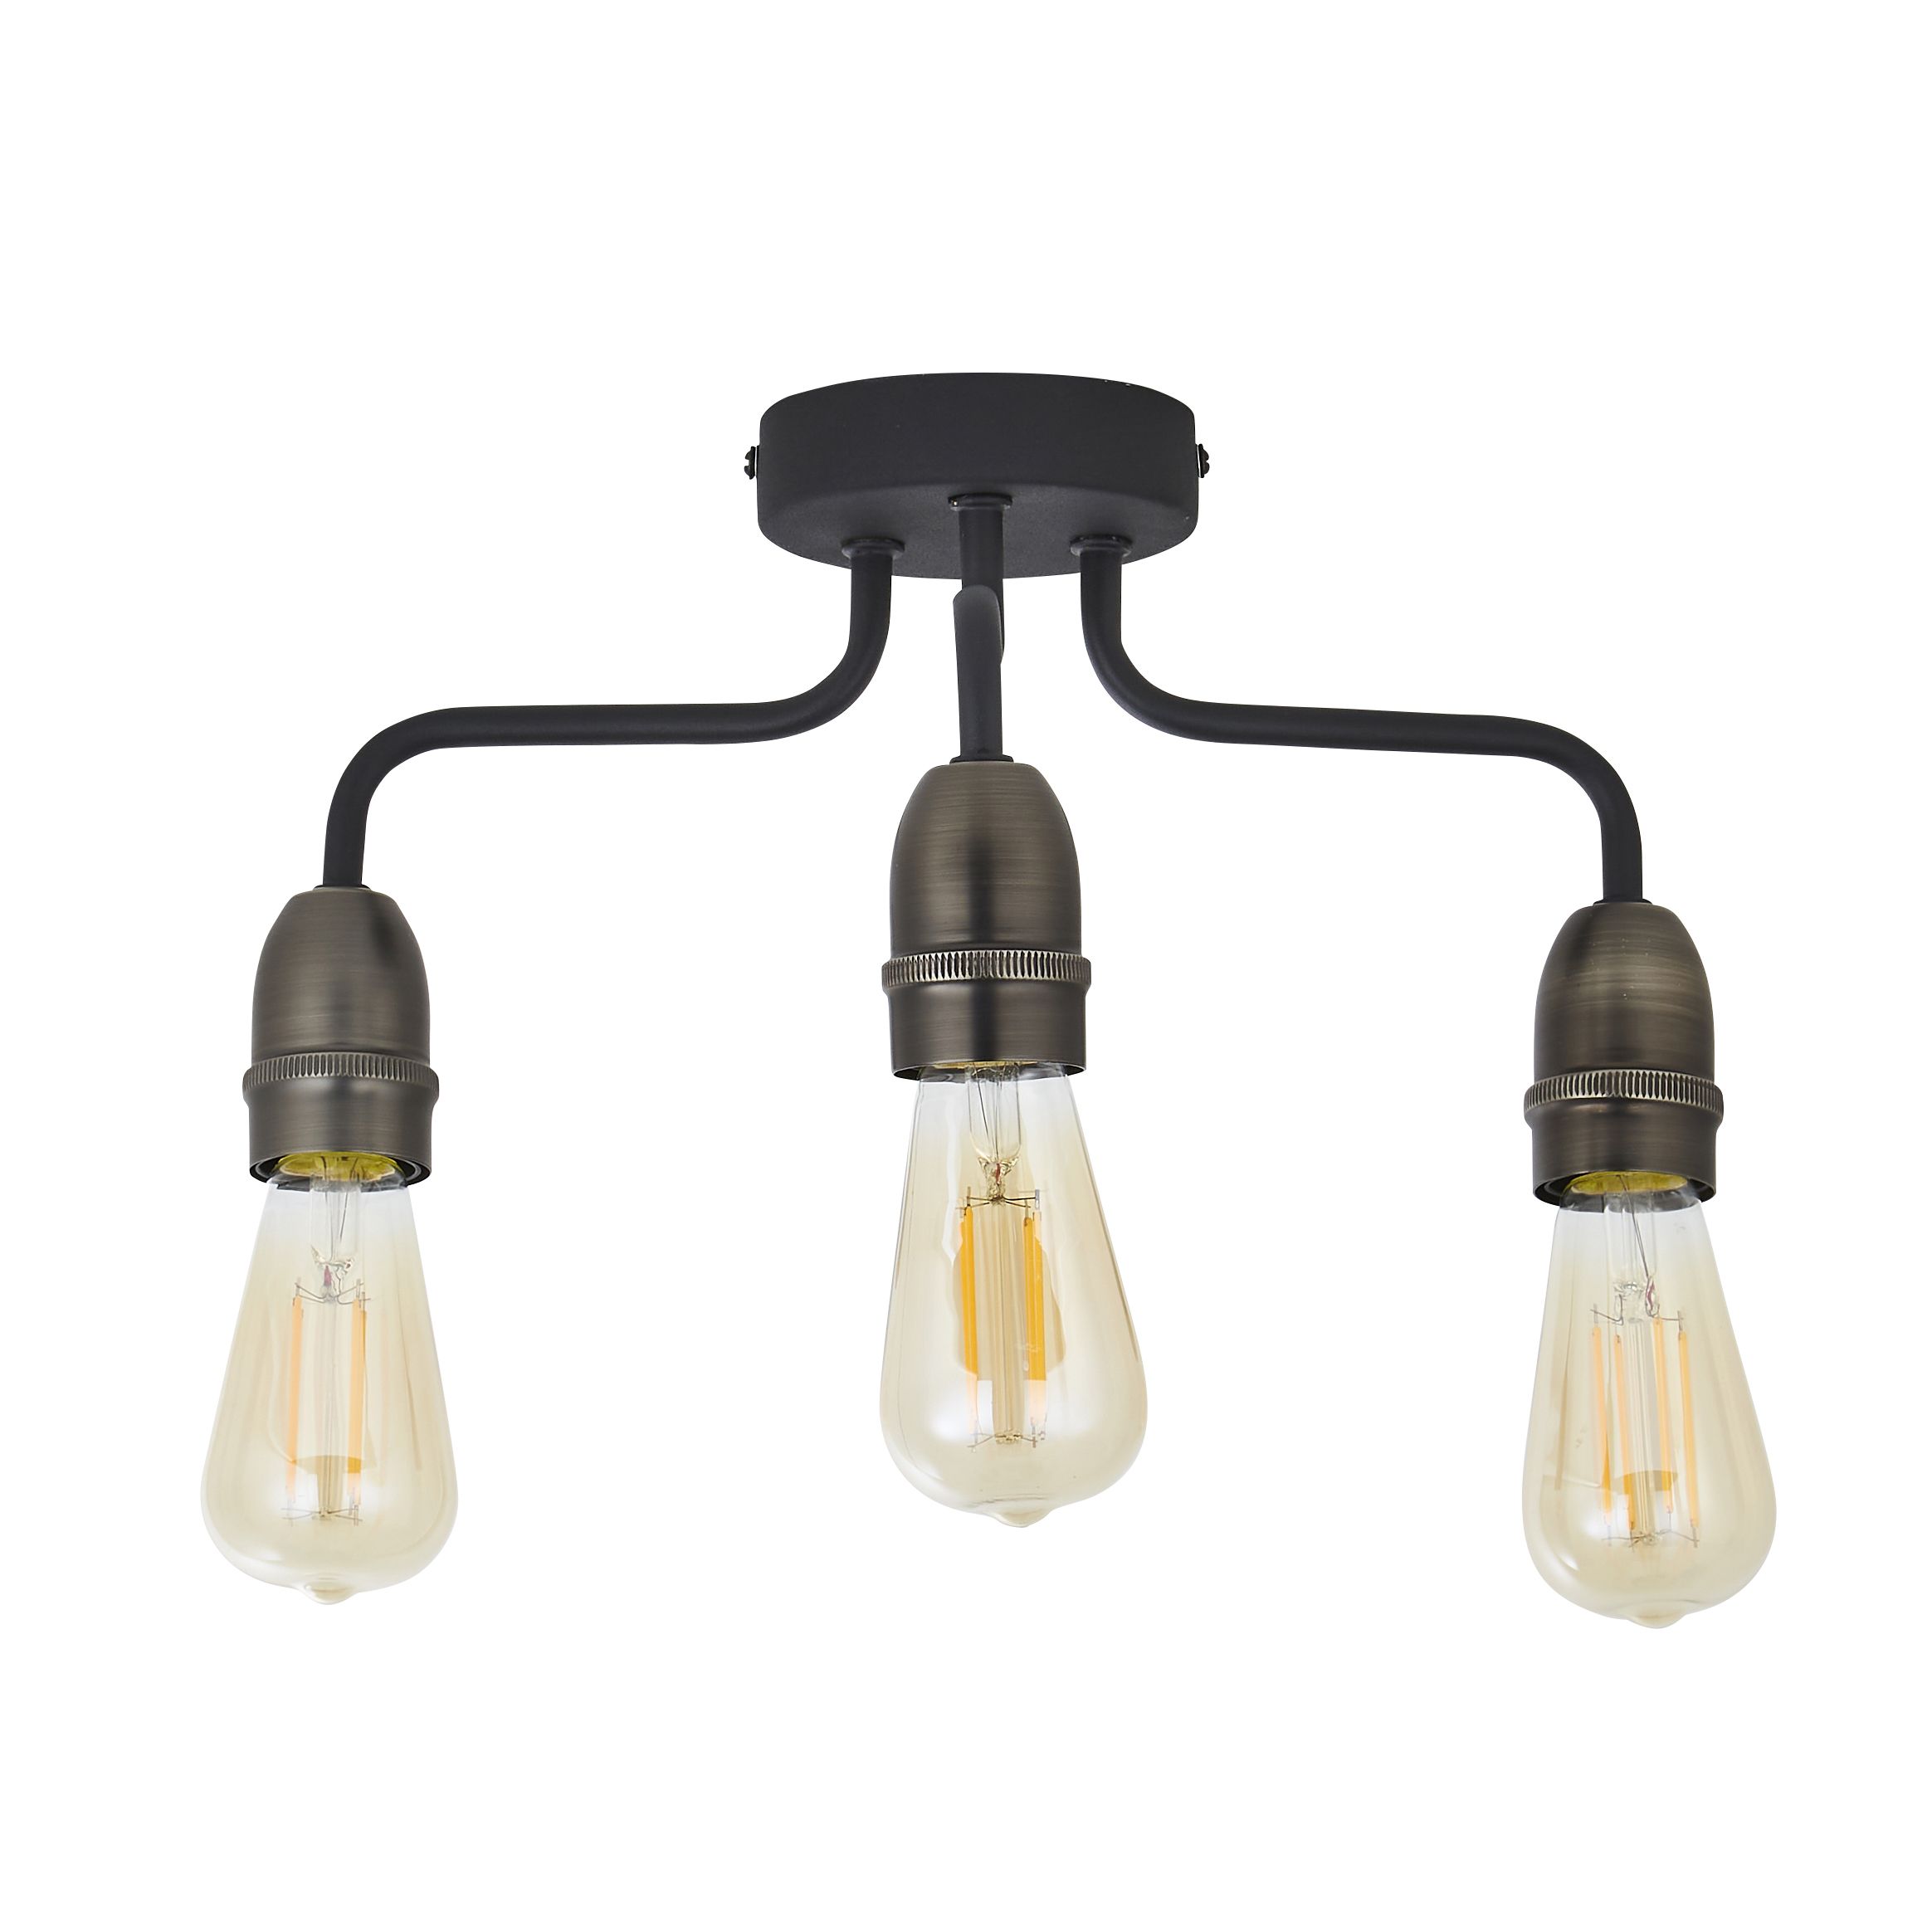 Inlight KYAT Industrial Matt Metal Black & bronze 3 Lamp LED Ceiling light